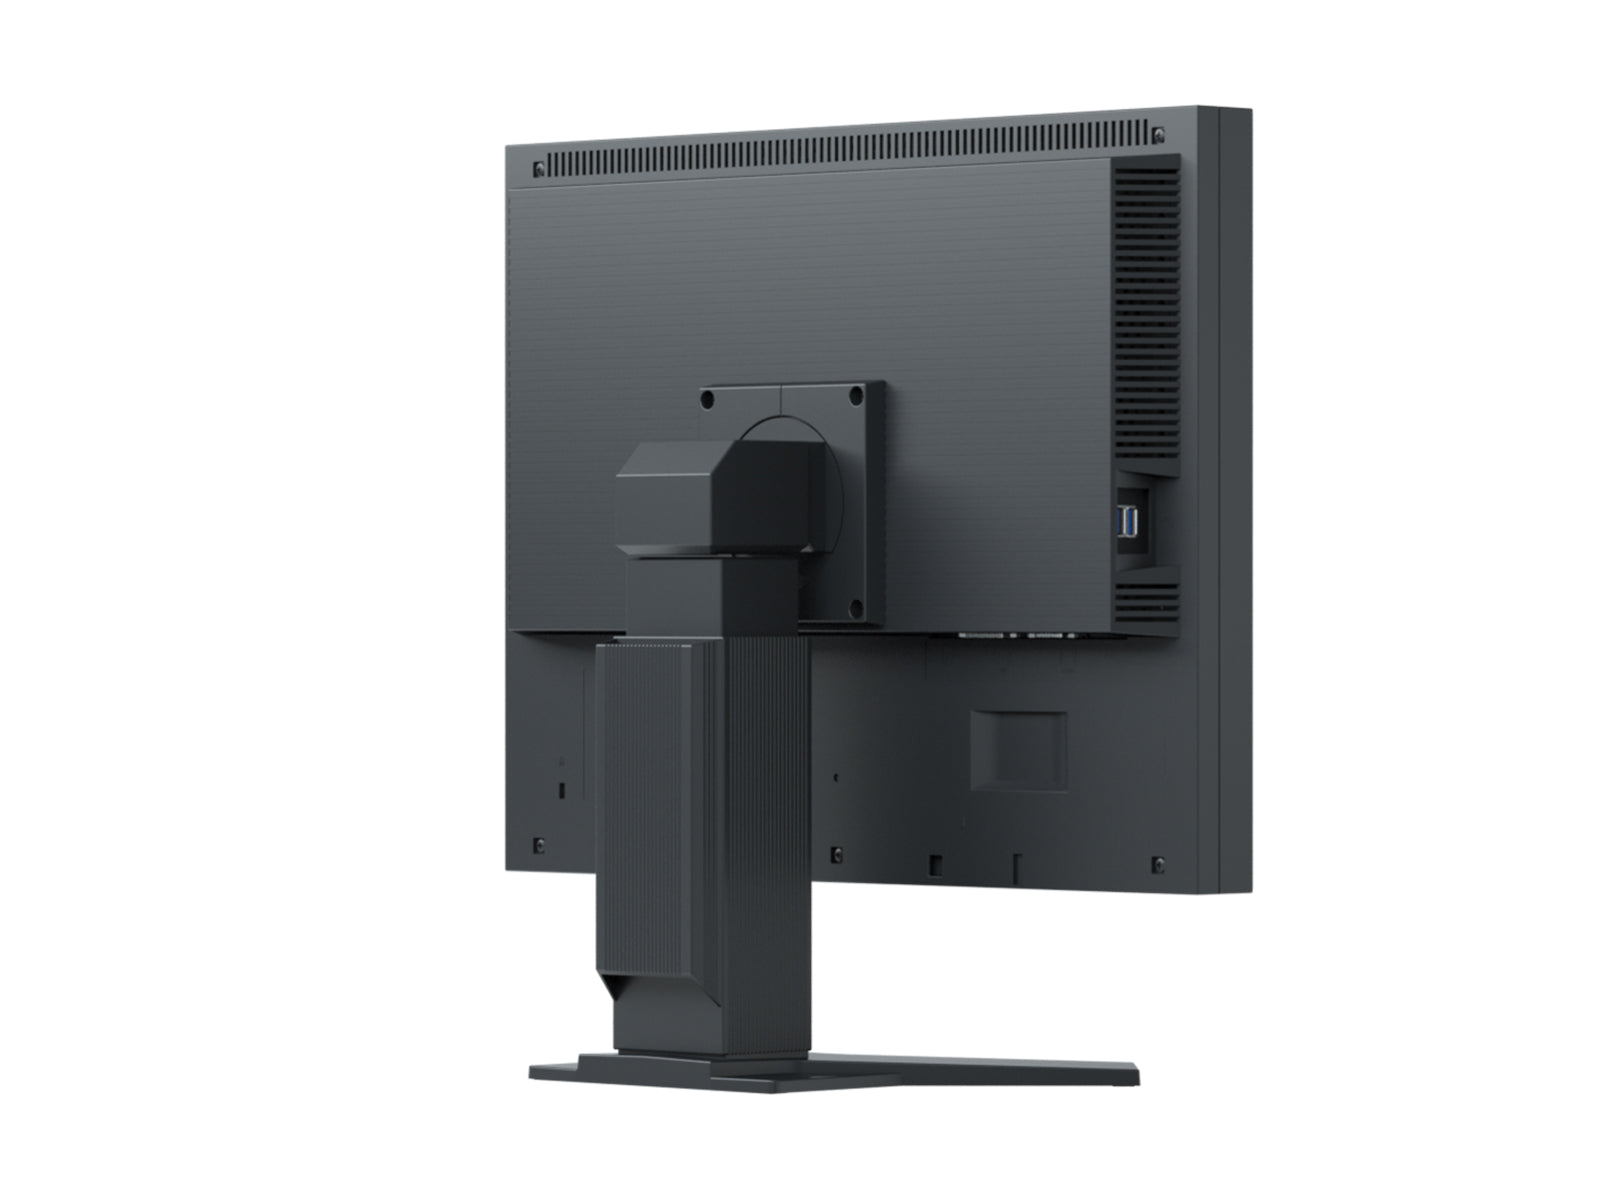 Eizo FlexScan S2133 21.3 インチ 1600x1200 IPS ディスプレイ モニター (S2133-BK) Monitors.com